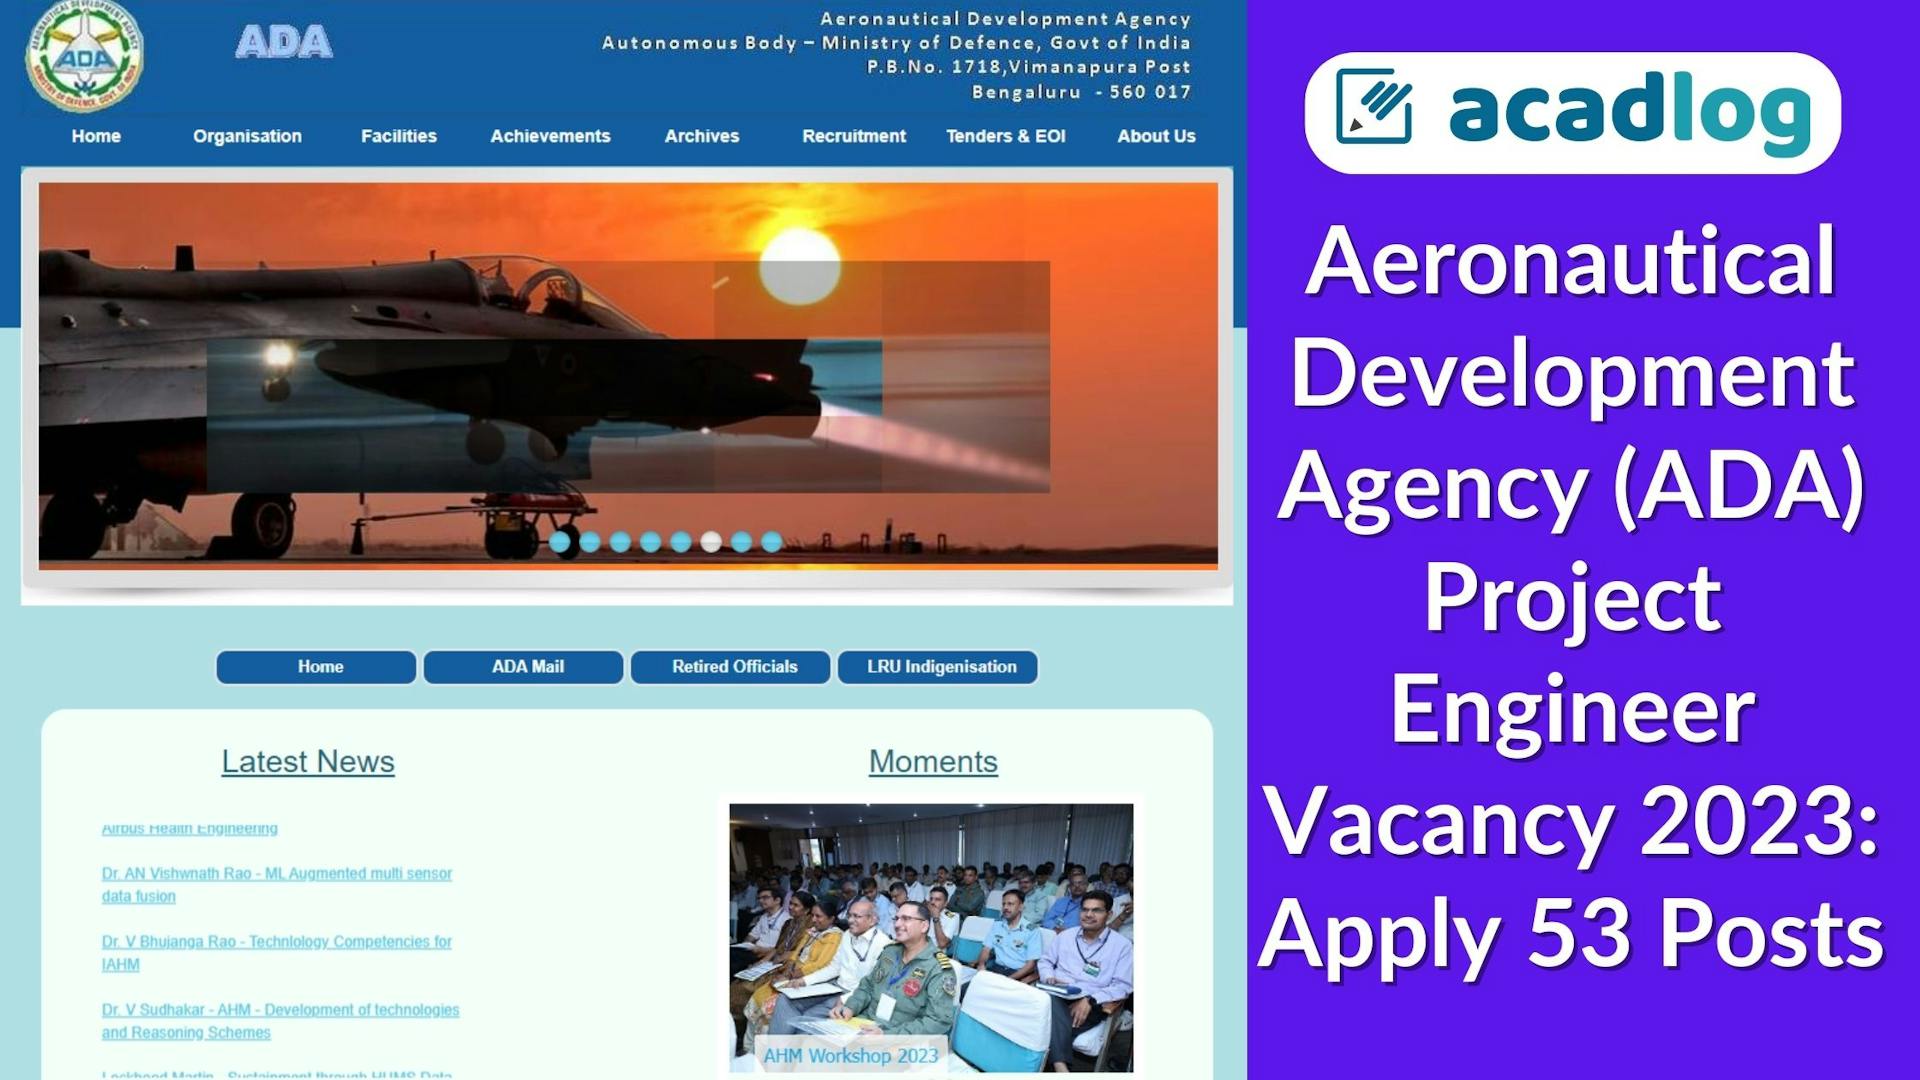 Aeronautical Development Agency (ADA) Project Engineer Vacancy 2023: Apply 53 Posts